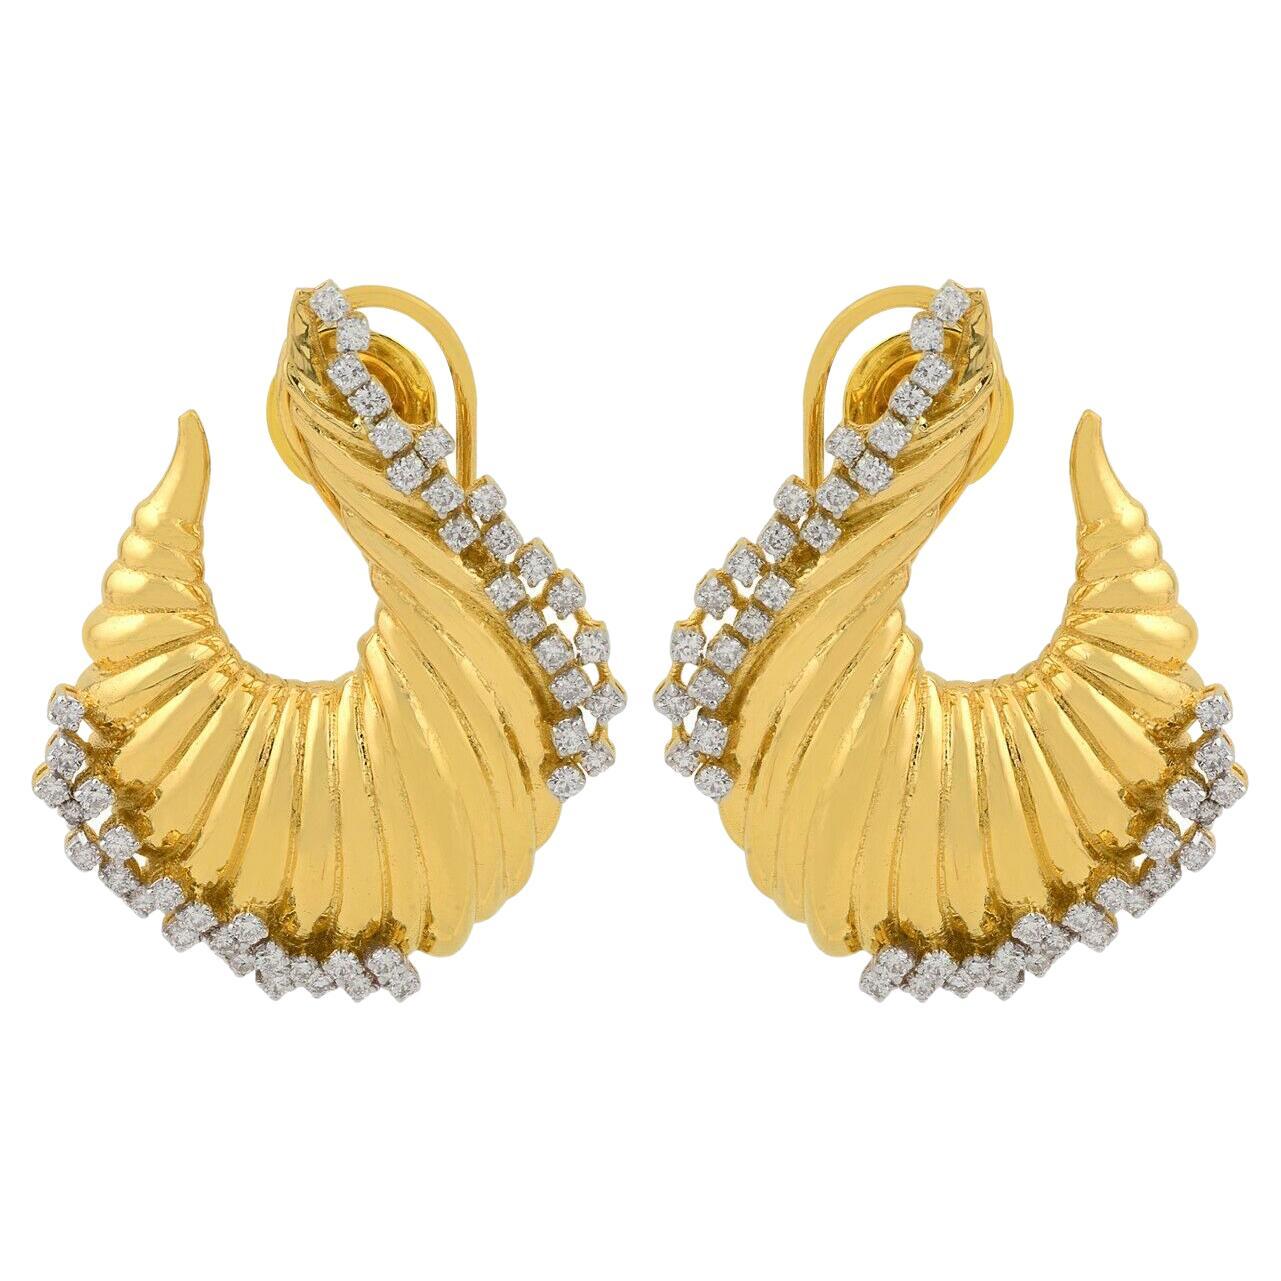 Seashell Diamond 14 Karat Yellow Gold Earrings